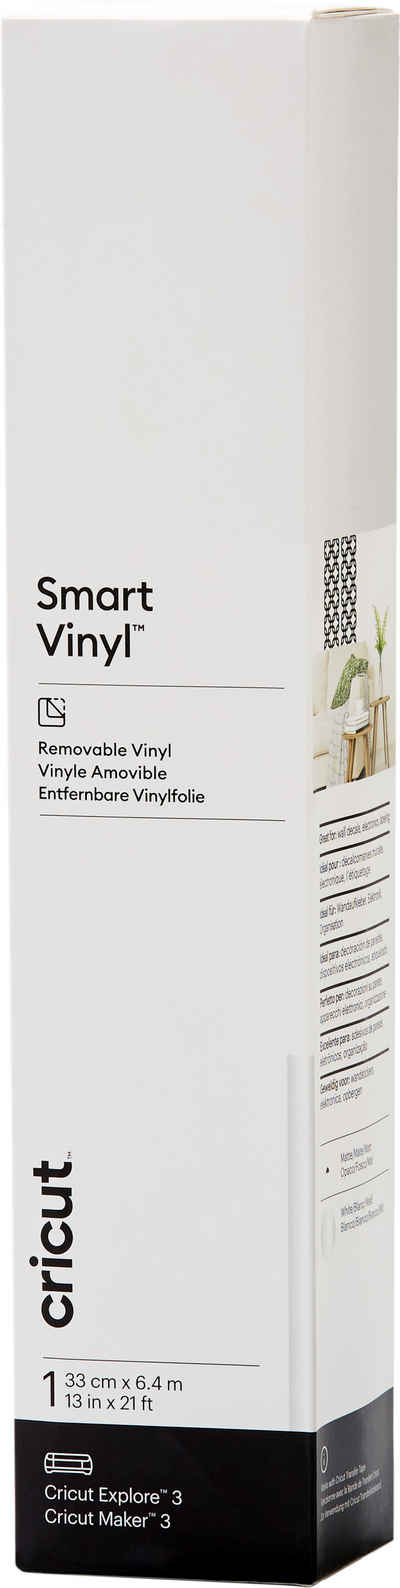 Cricut Dekorationsfolie Vinylfolie Smart Vinyl Removable, selbstklebend 640 cm x 33 cm